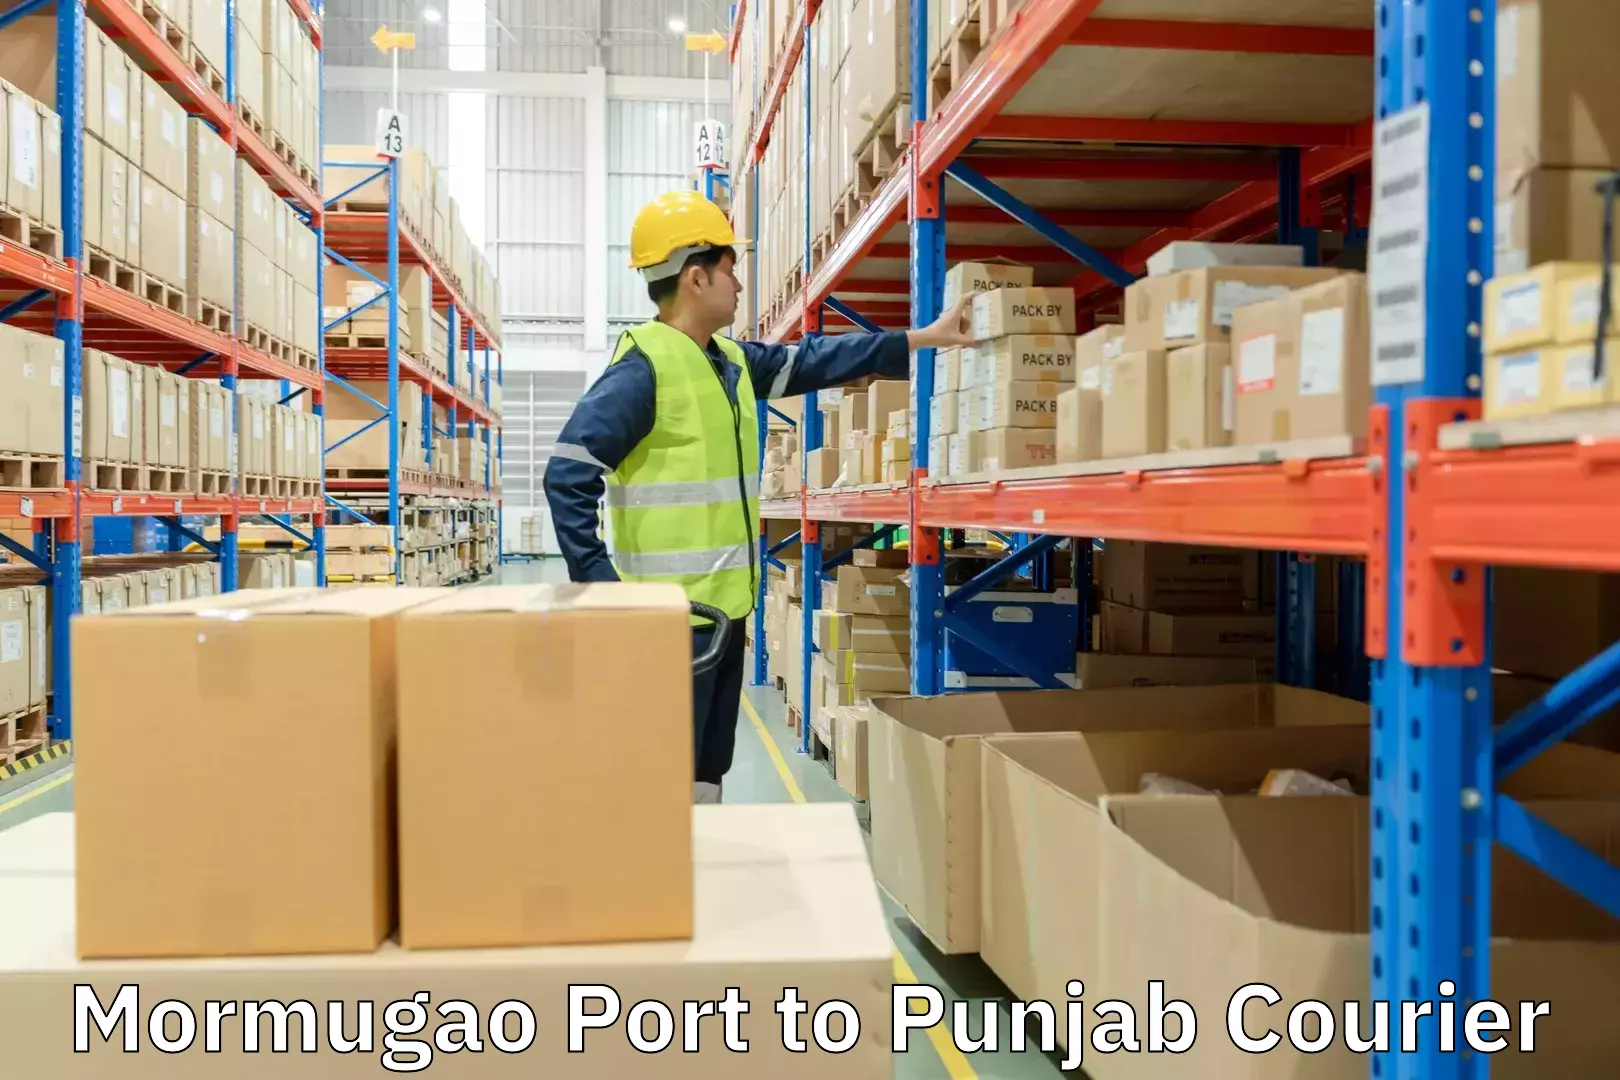 International parcel service Mormugao Port to Punjab